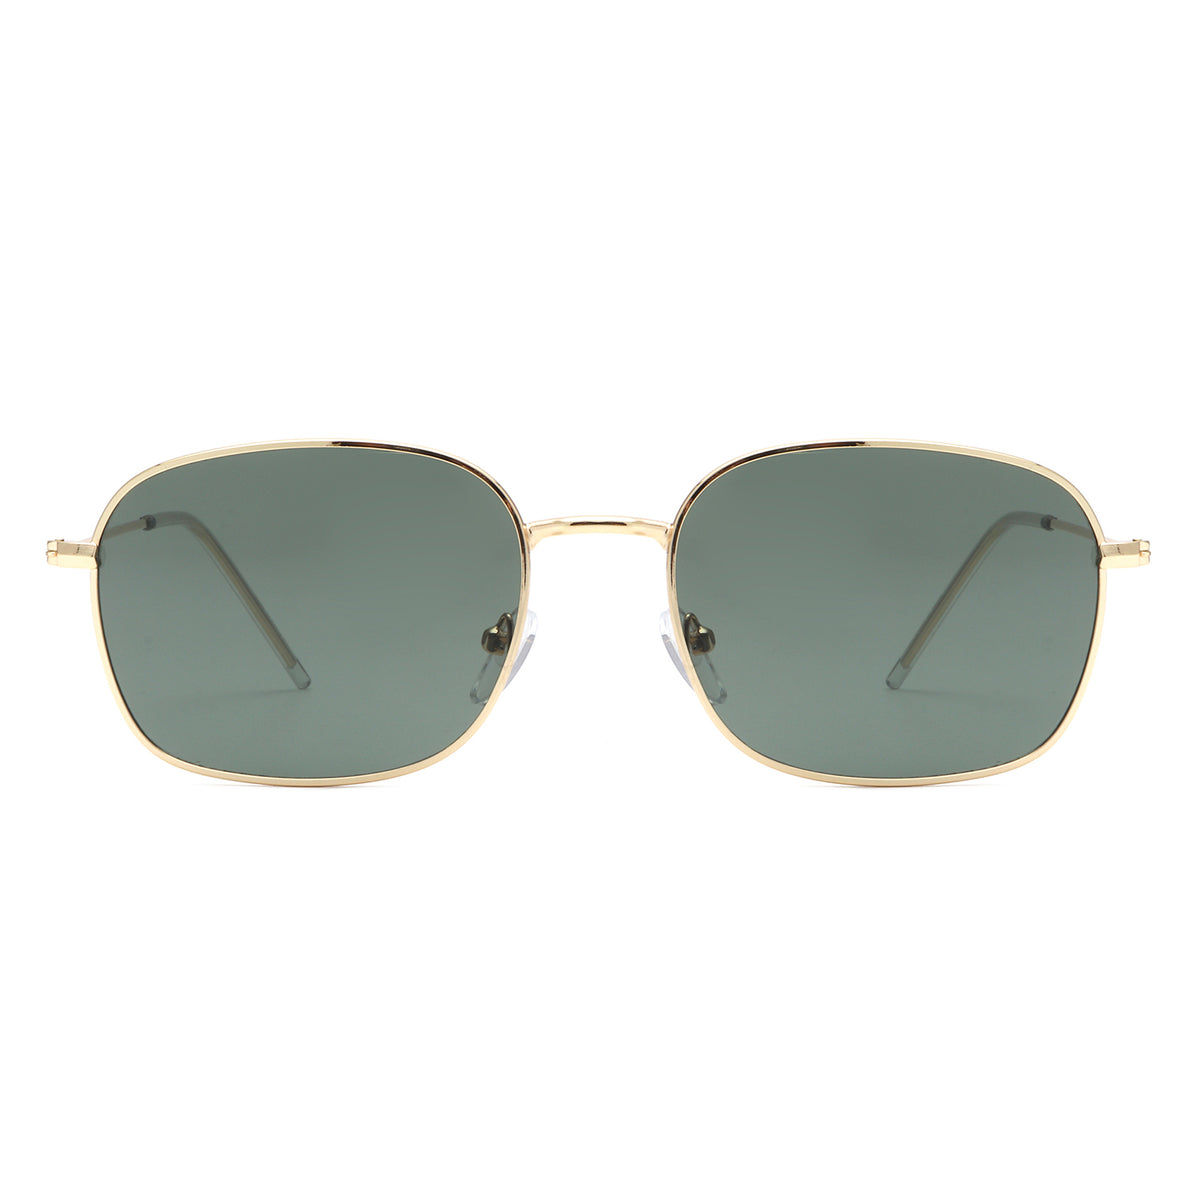 J1005 - Retro Square Flat Top Tinted Fashion Wholesale Sunglasses